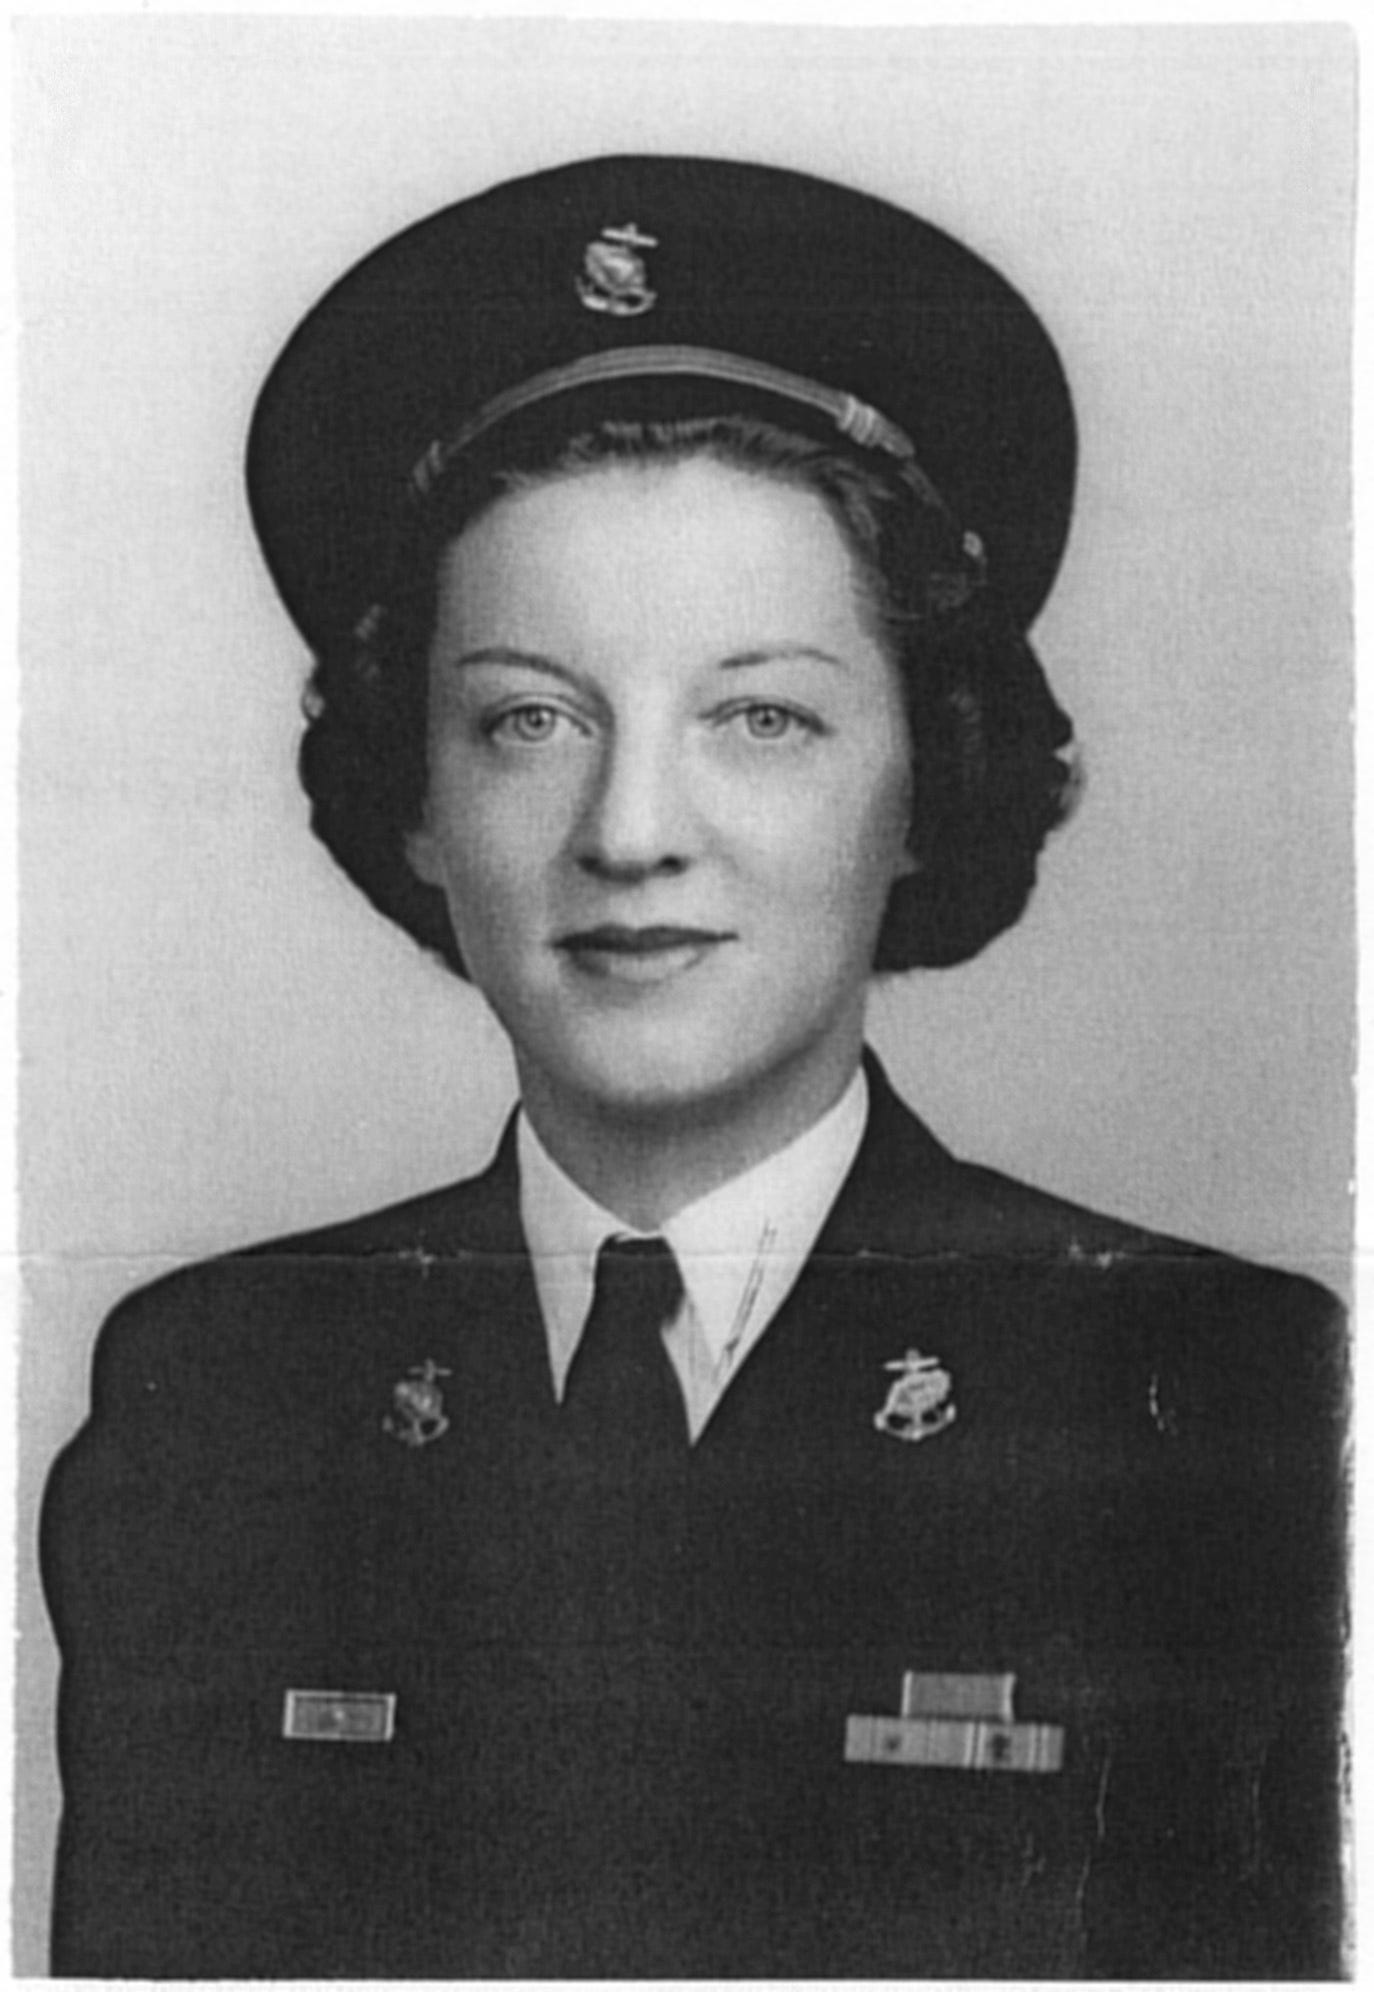 Headshot of a young Ann Bernatitus, in uniform